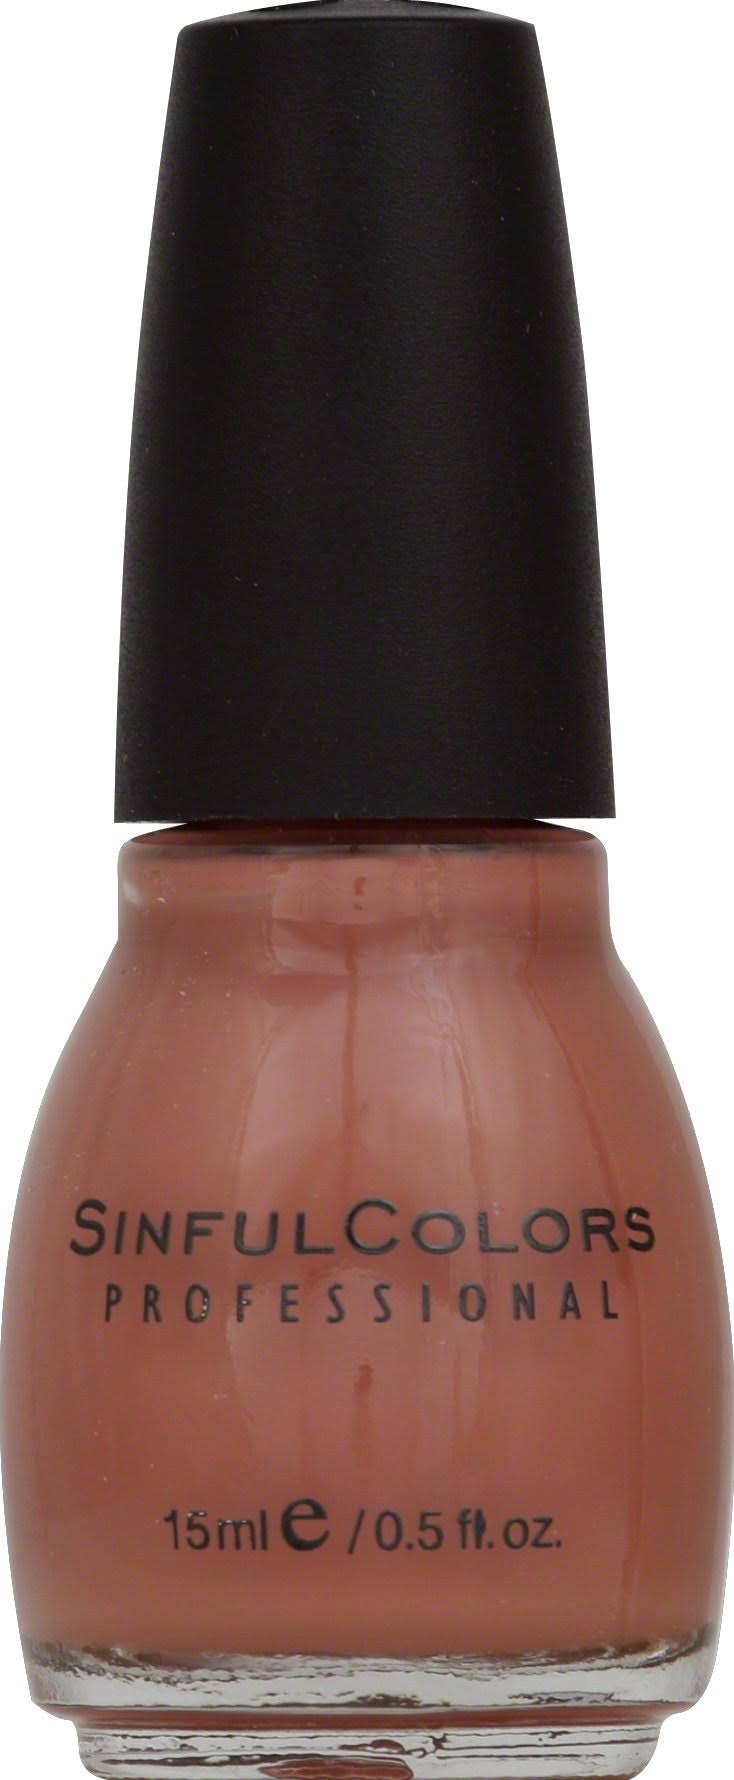 Sinful Colors Professional Nail Polish - Vacation Time, 0.5oz